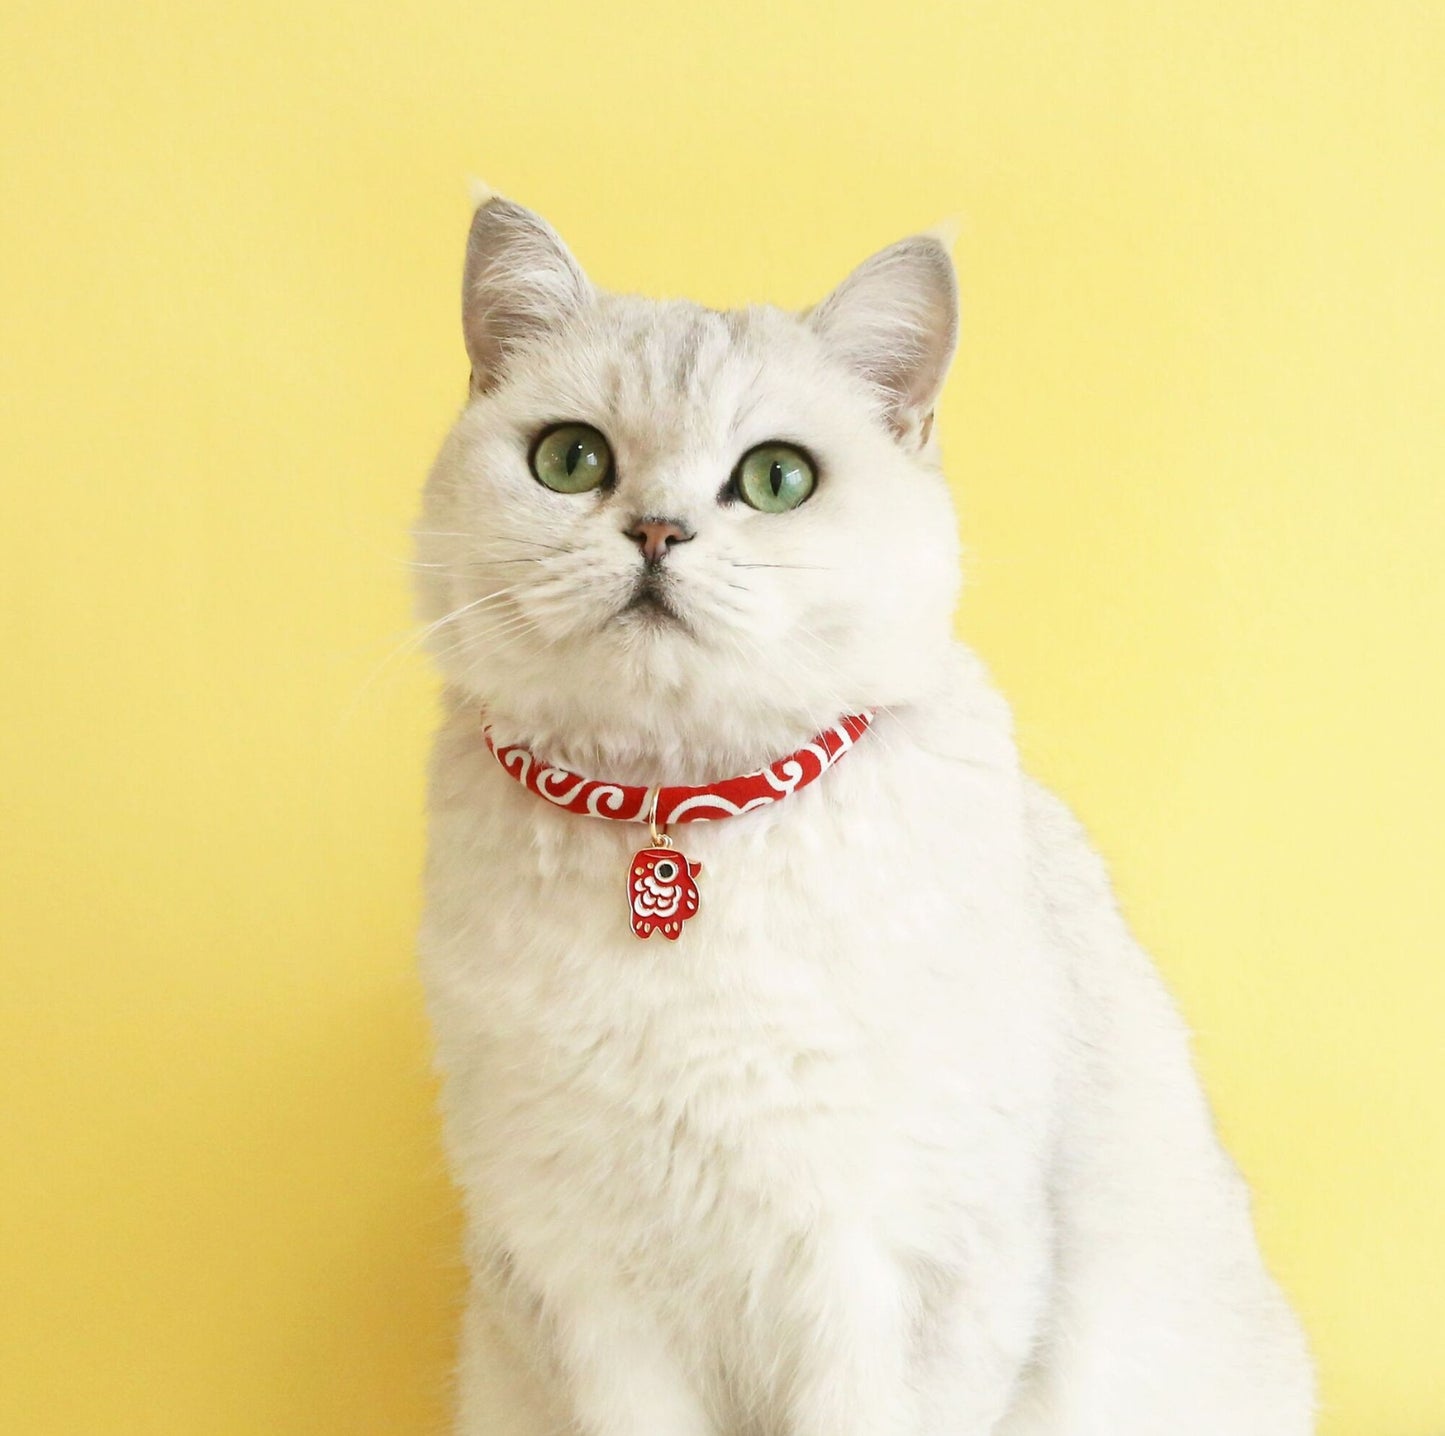 Charming Koi Fish Pendant Collar: Japanese-Styled Adjustable Pet Accessory